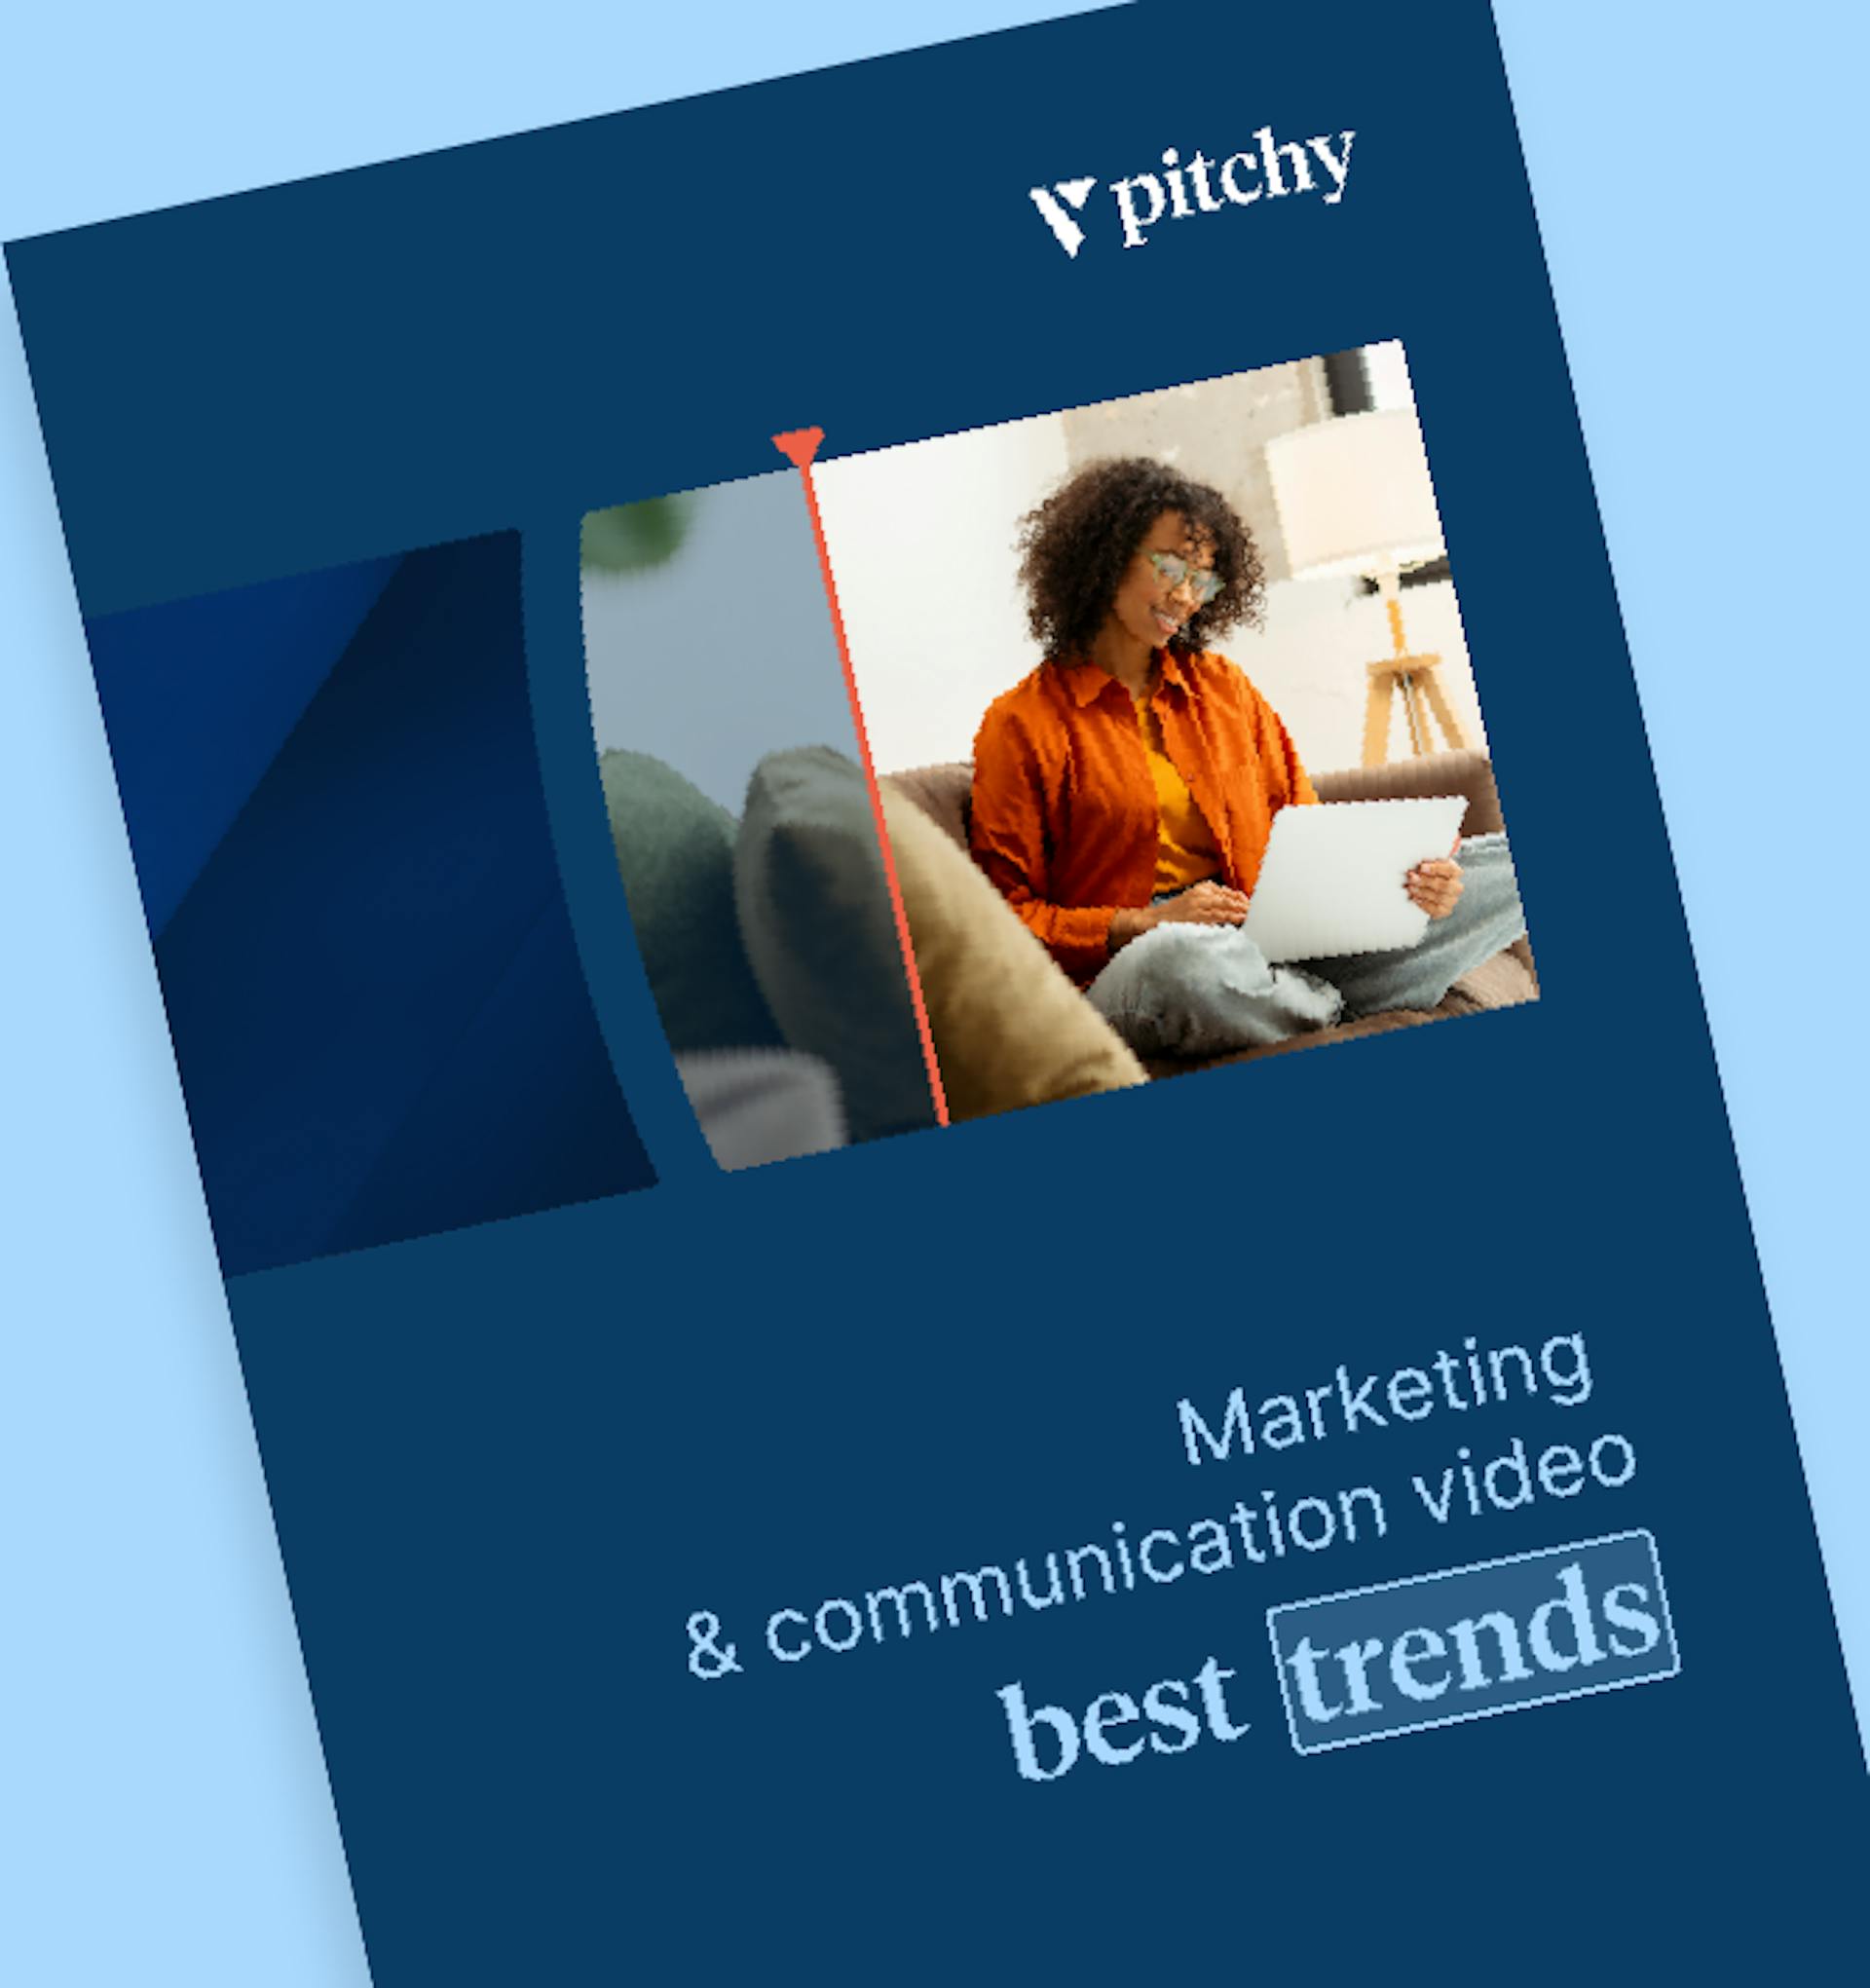 Marketing video best practices